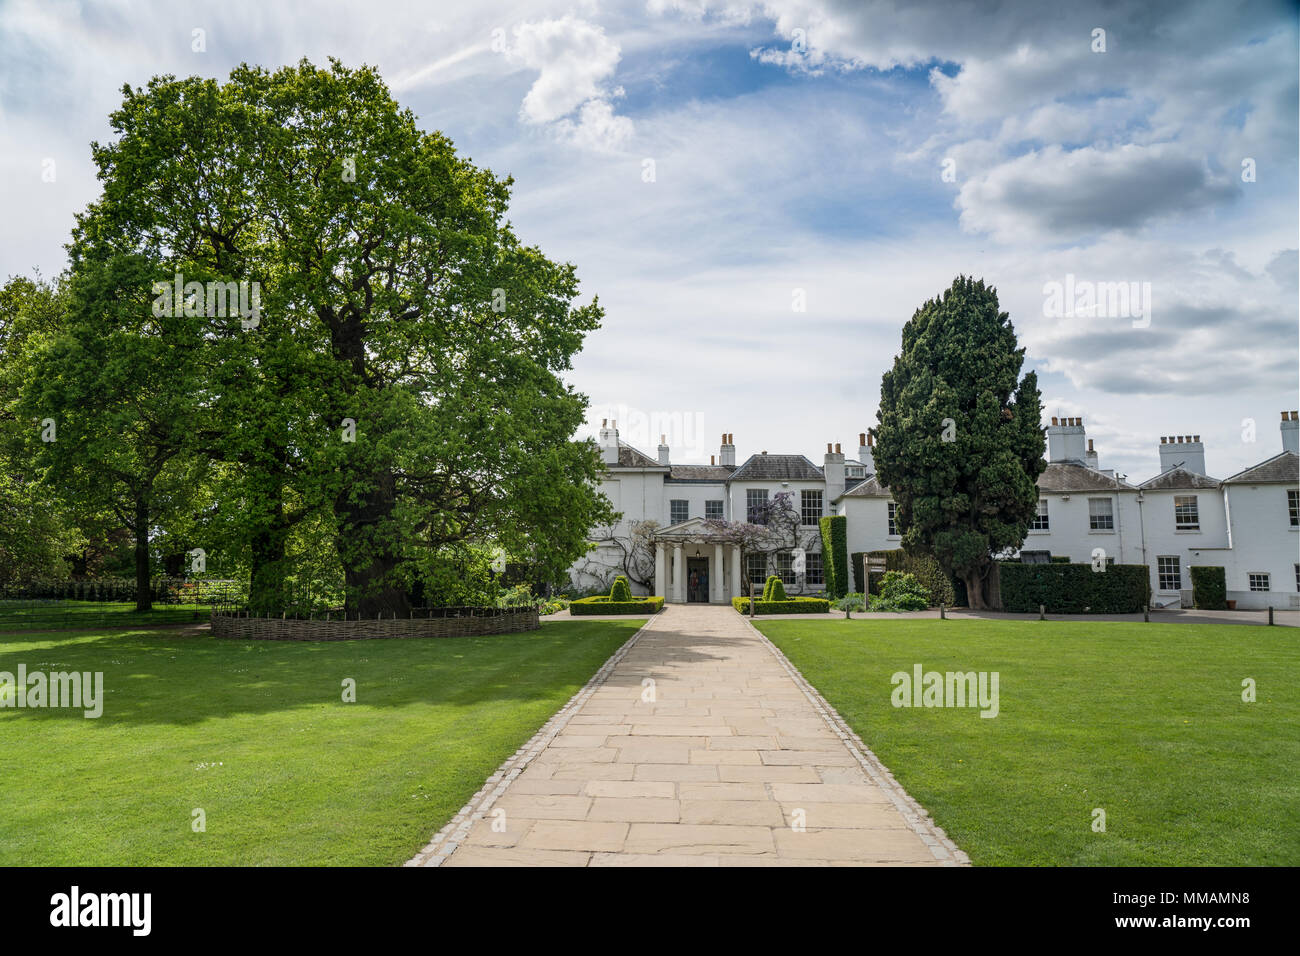 Blick von Pembroke Lodge im Richmond Park, London. Foto Datum: Donnerstag, 3. Mai 2018. Foto: Roger Garfield/Alamy Stockfoto